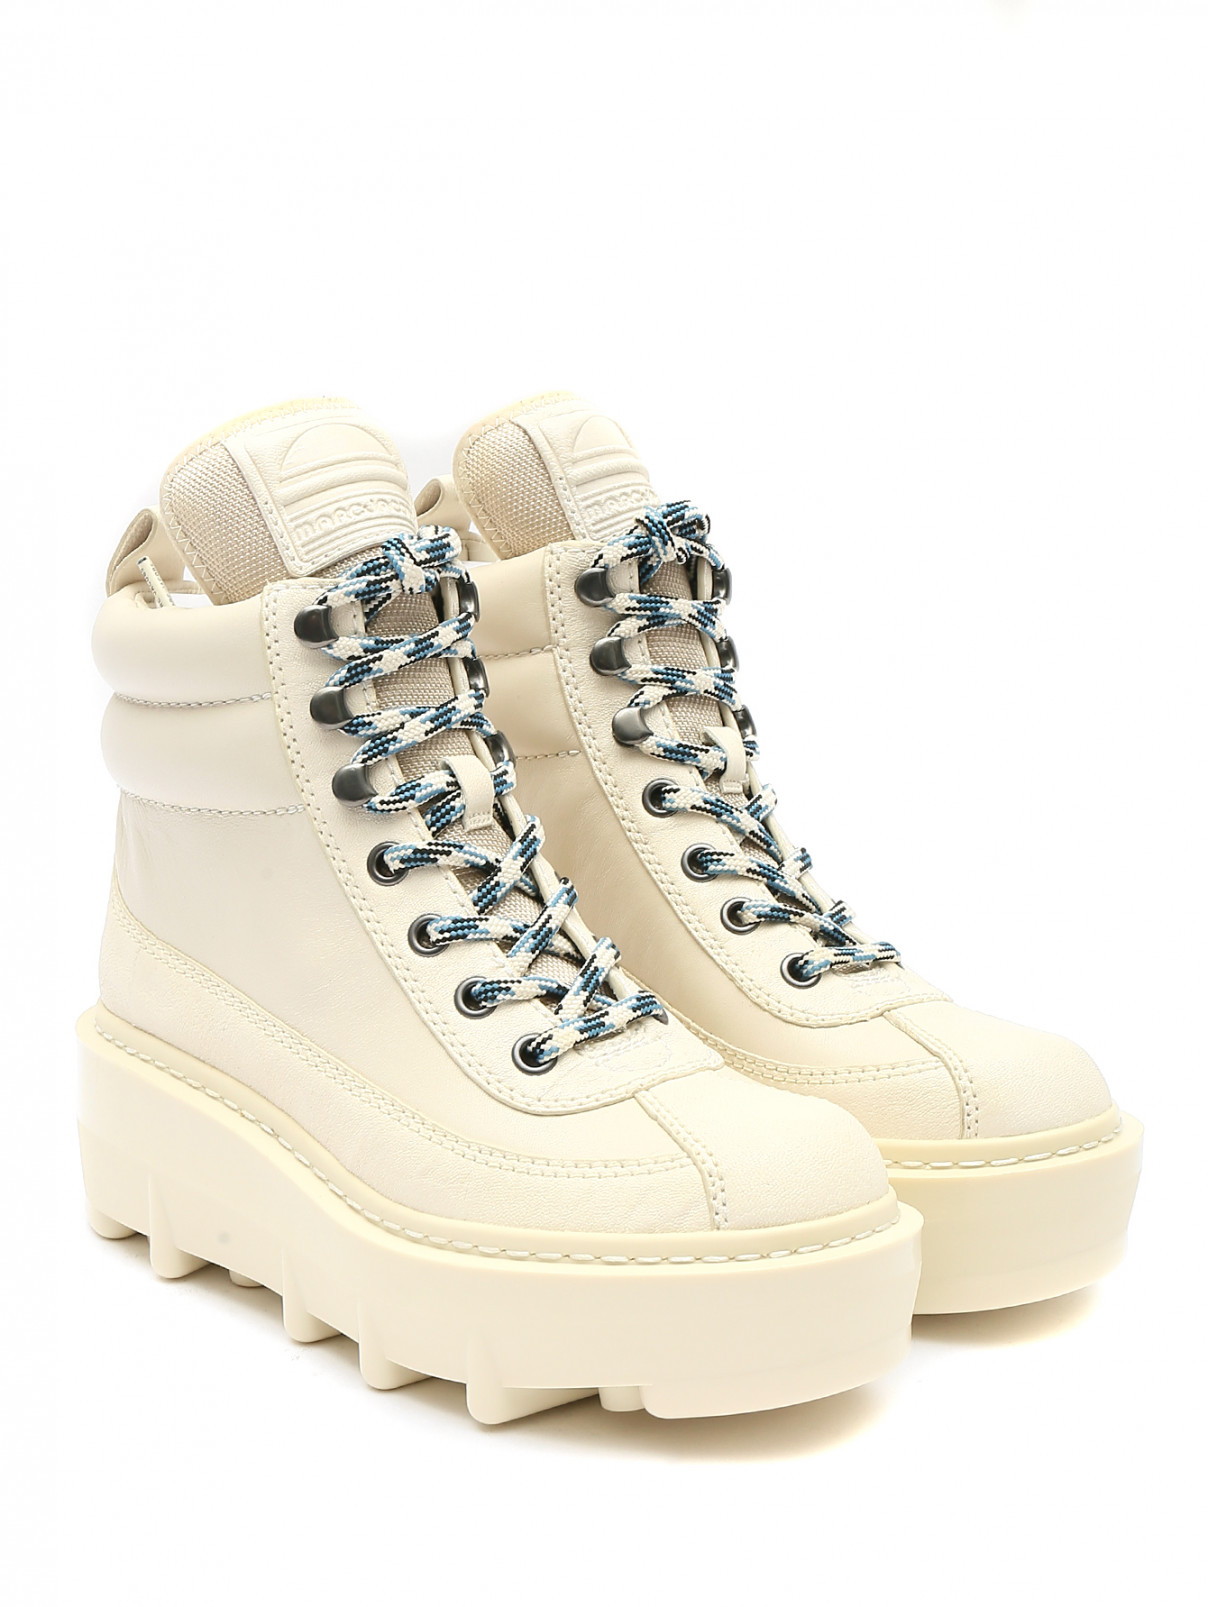 Ботинки из кожи на платформе Marc Jacobs  –  Общий вид  – Цвет:  Белый